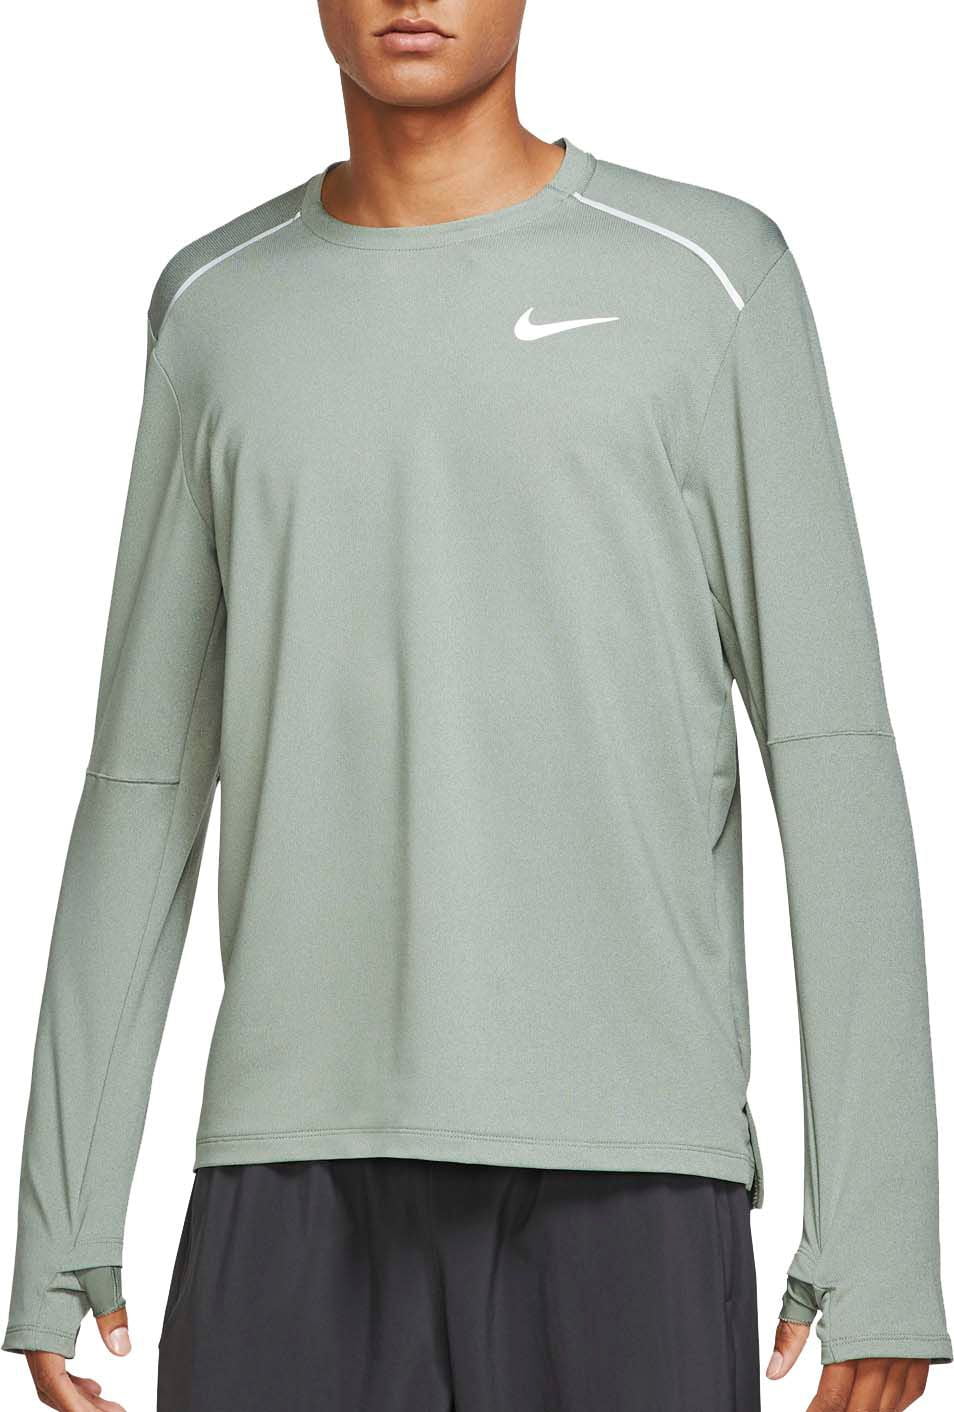 Nike Men's Element 3.0 Long Sleeve 